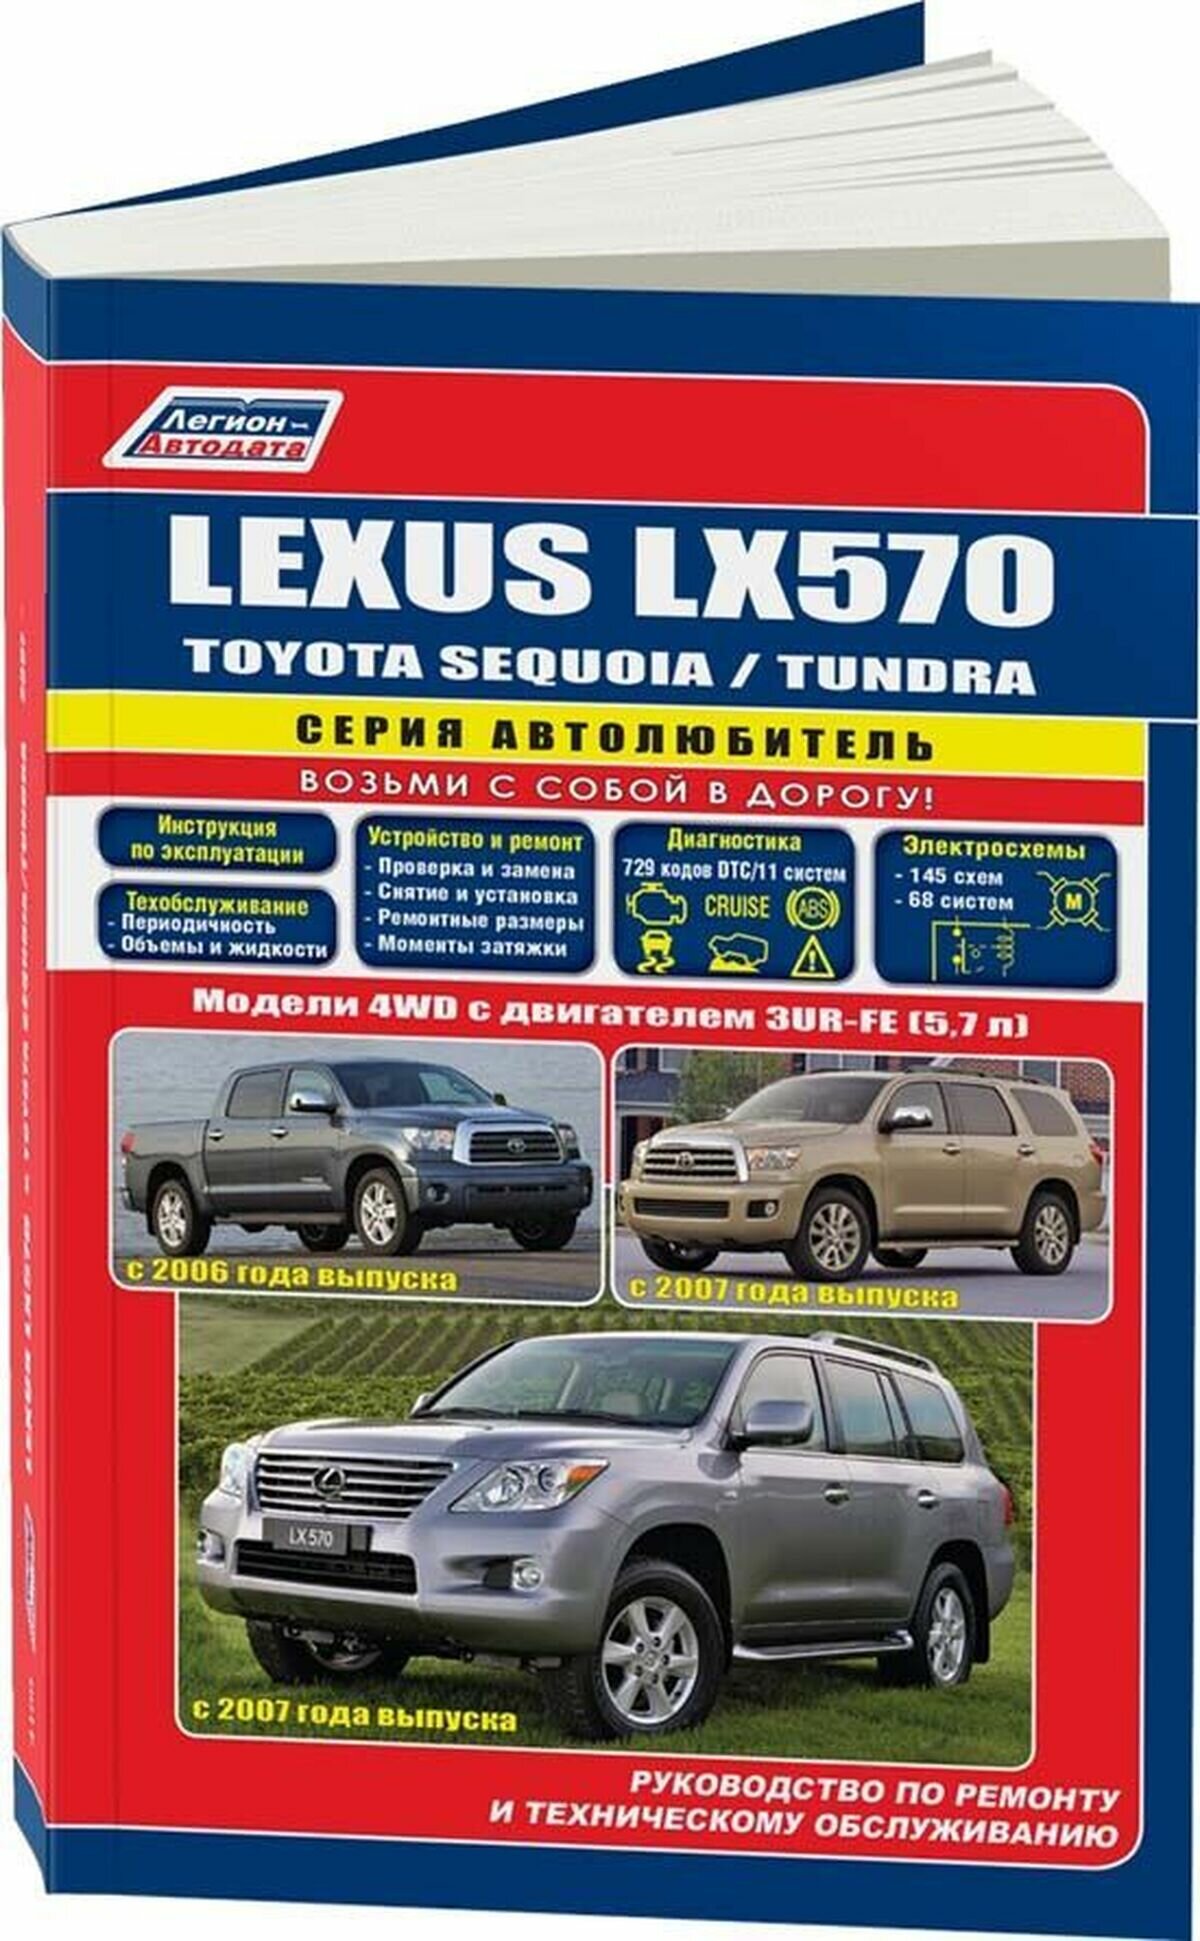 Lexus LX570. Toyota SEQUOIA / TUNDRA. Модели 4WD с двигателем 3UR-FE (5,7 л.). Руководство по ремонту и техническому обслуживанию - фото №2